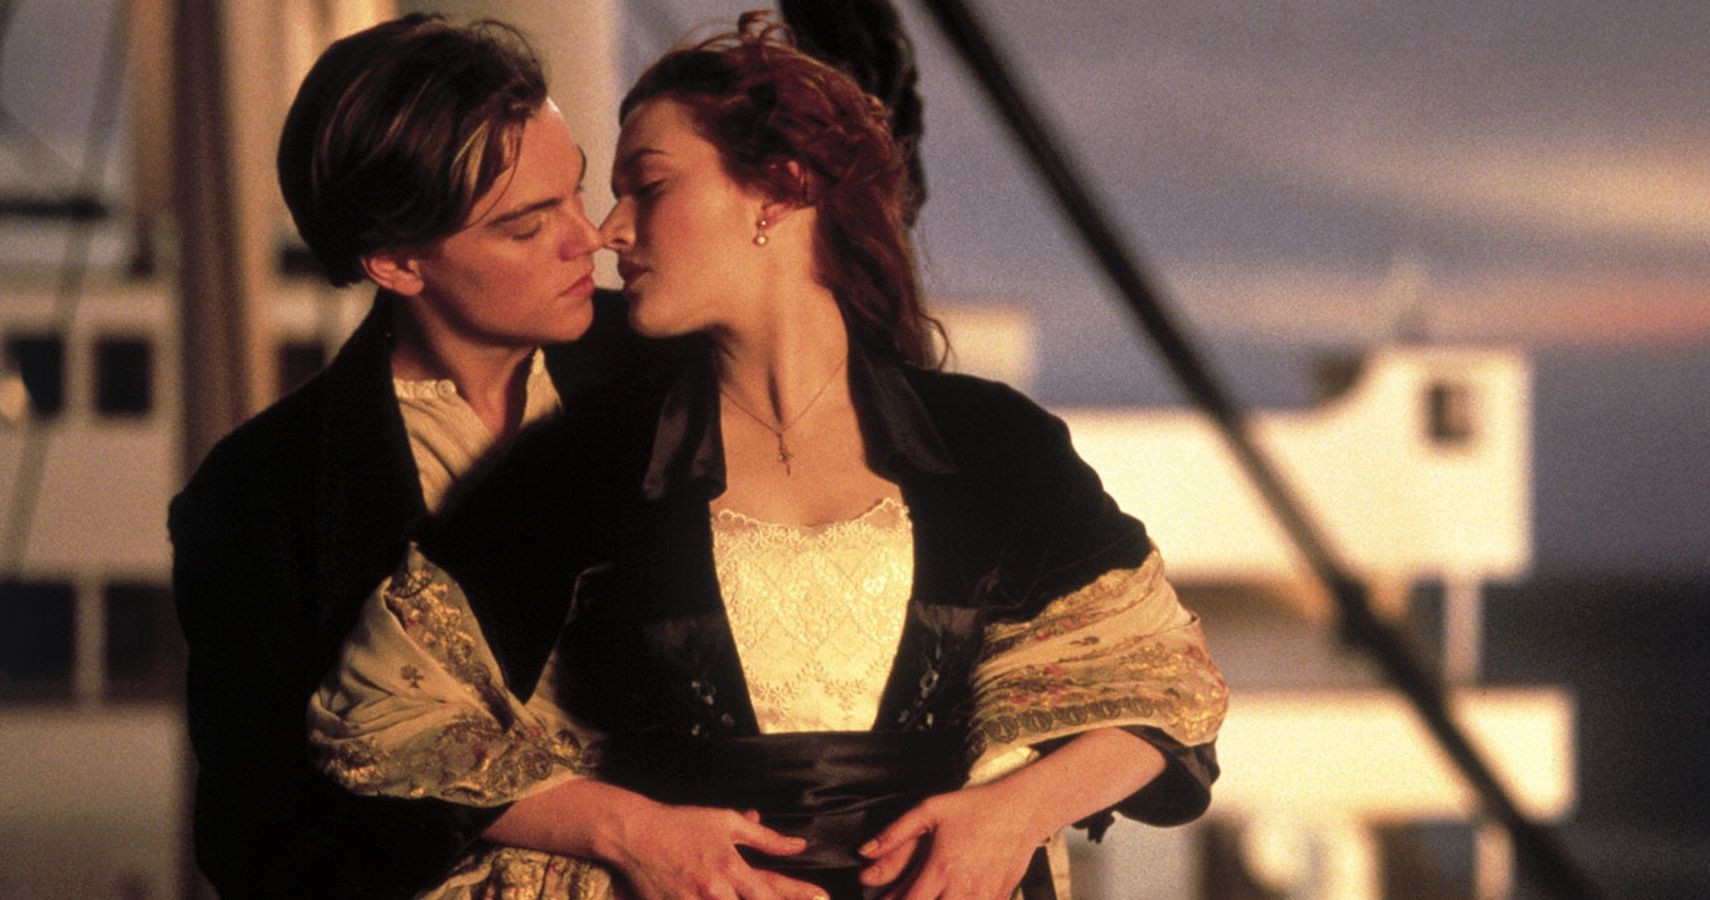 10 Best Romantic Period Movies According To IMDb